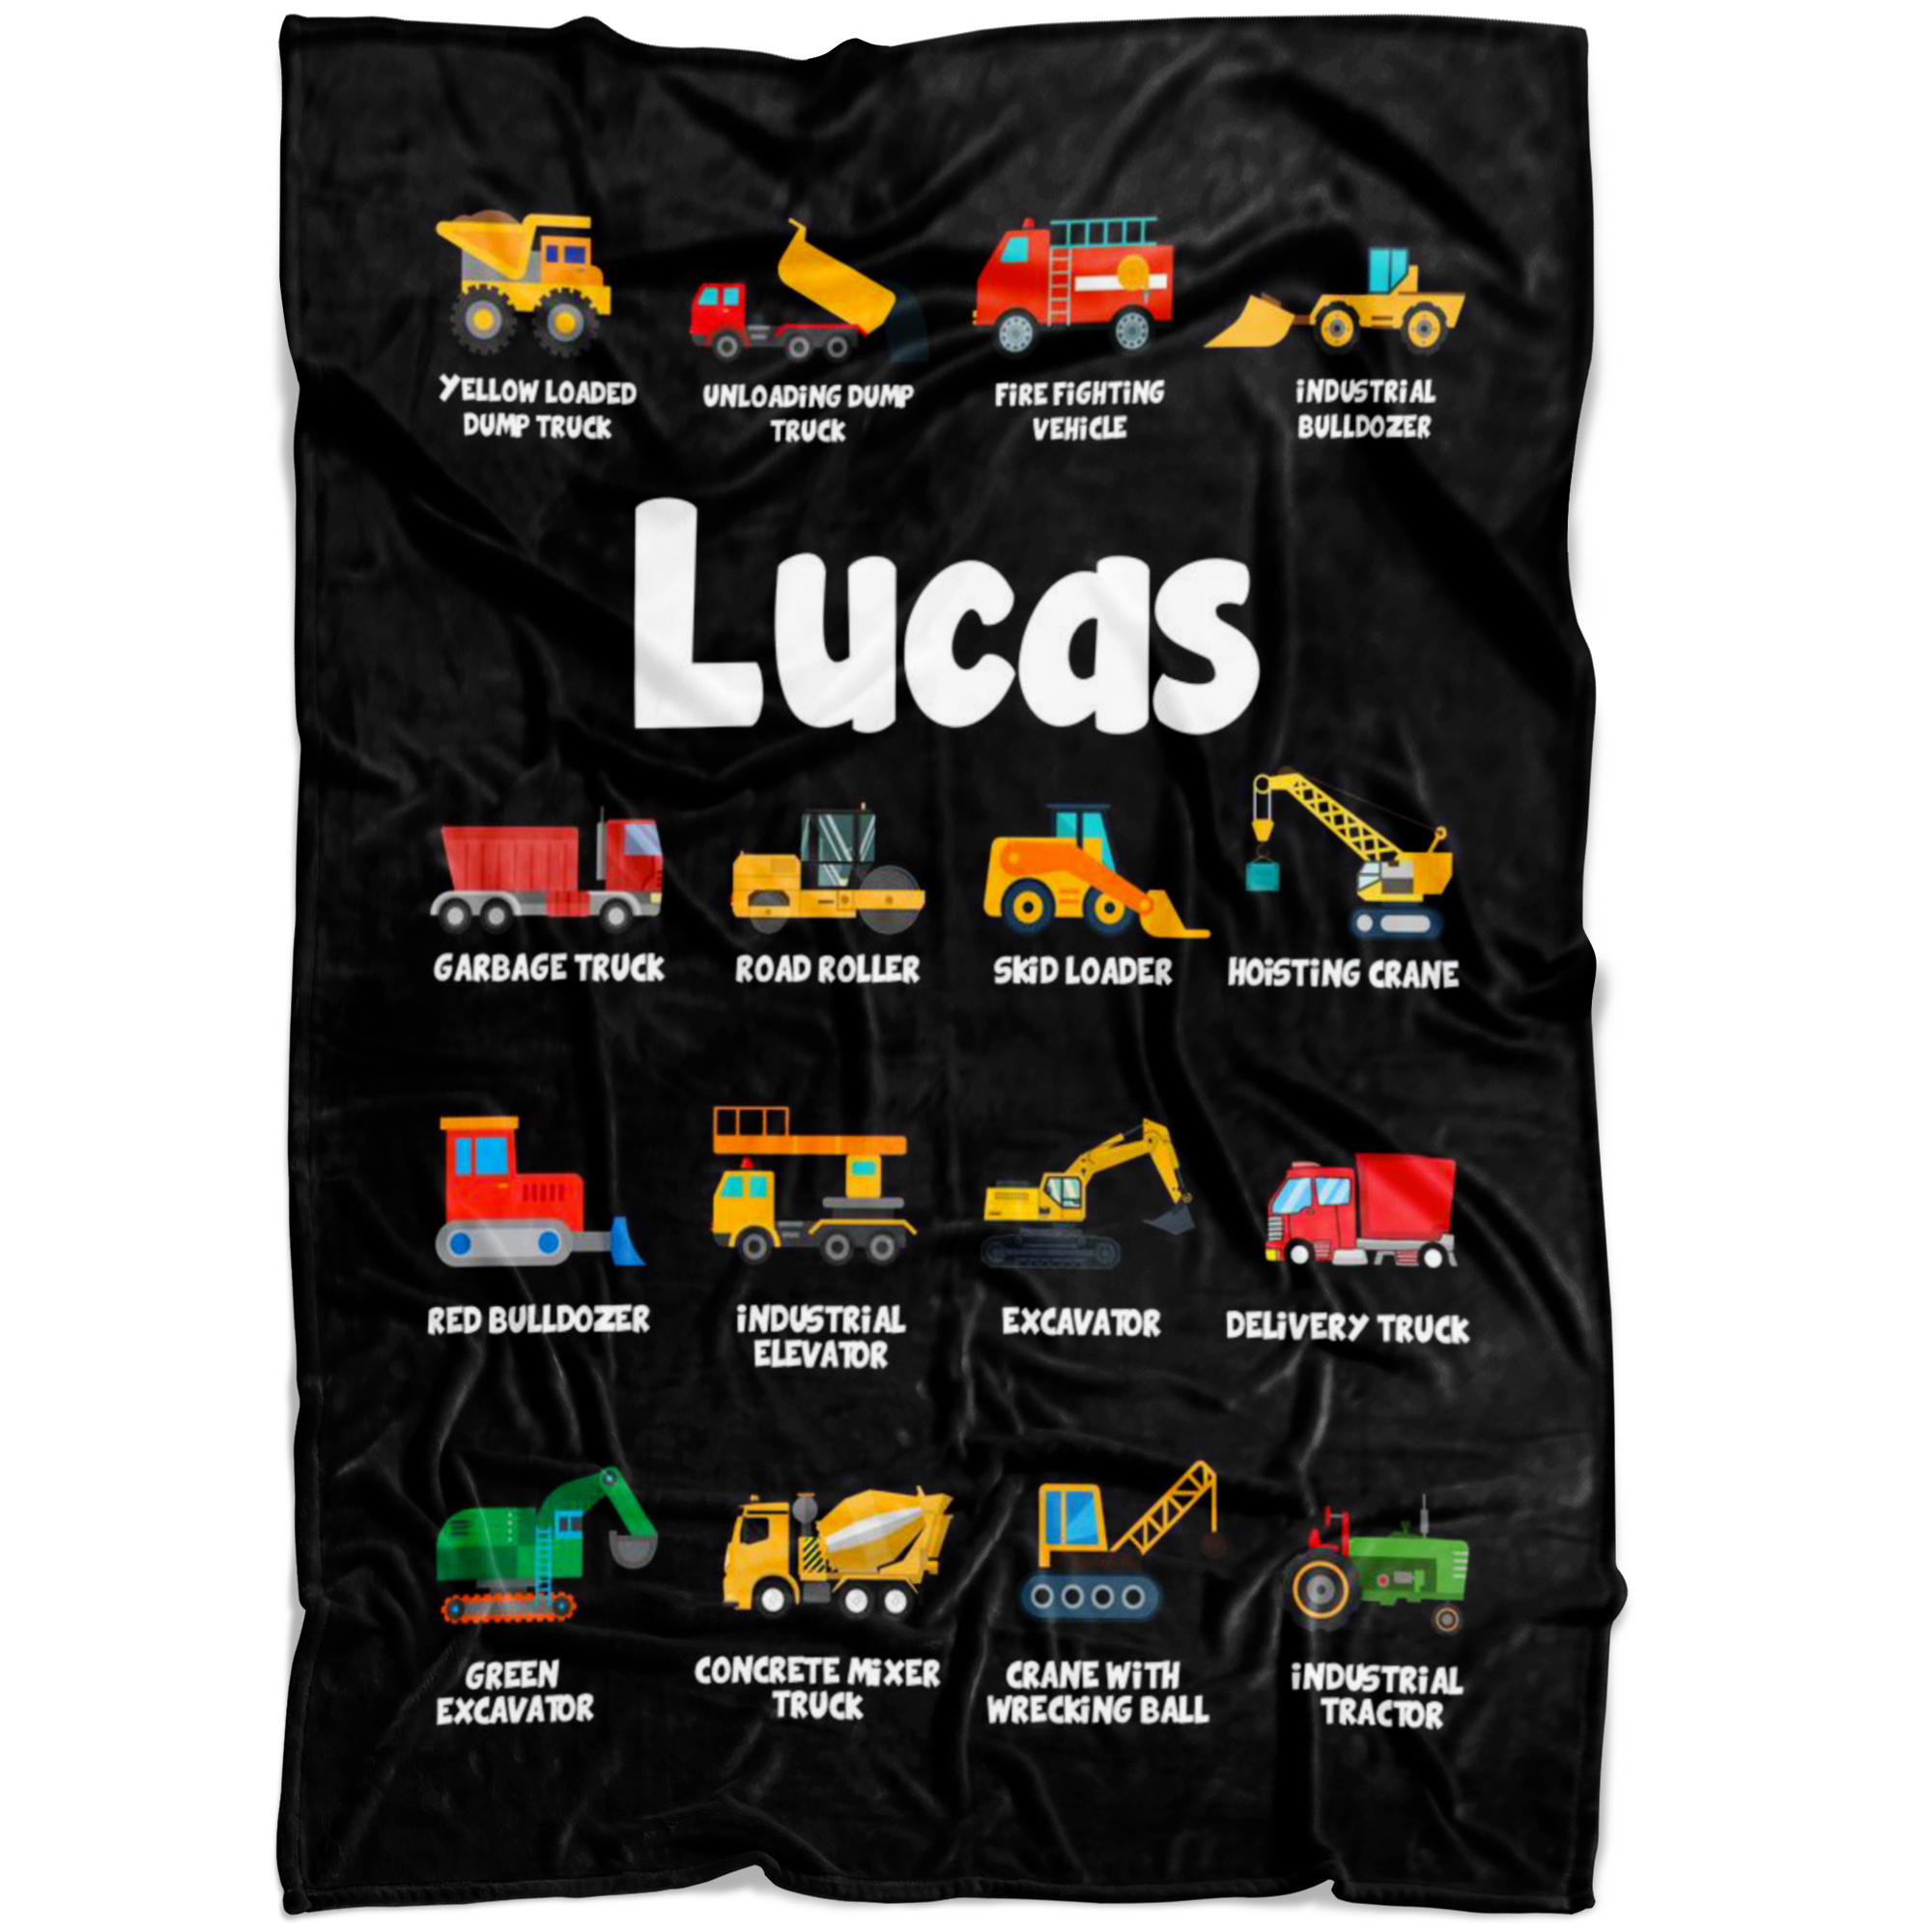 Lucas Construction Blanket Black